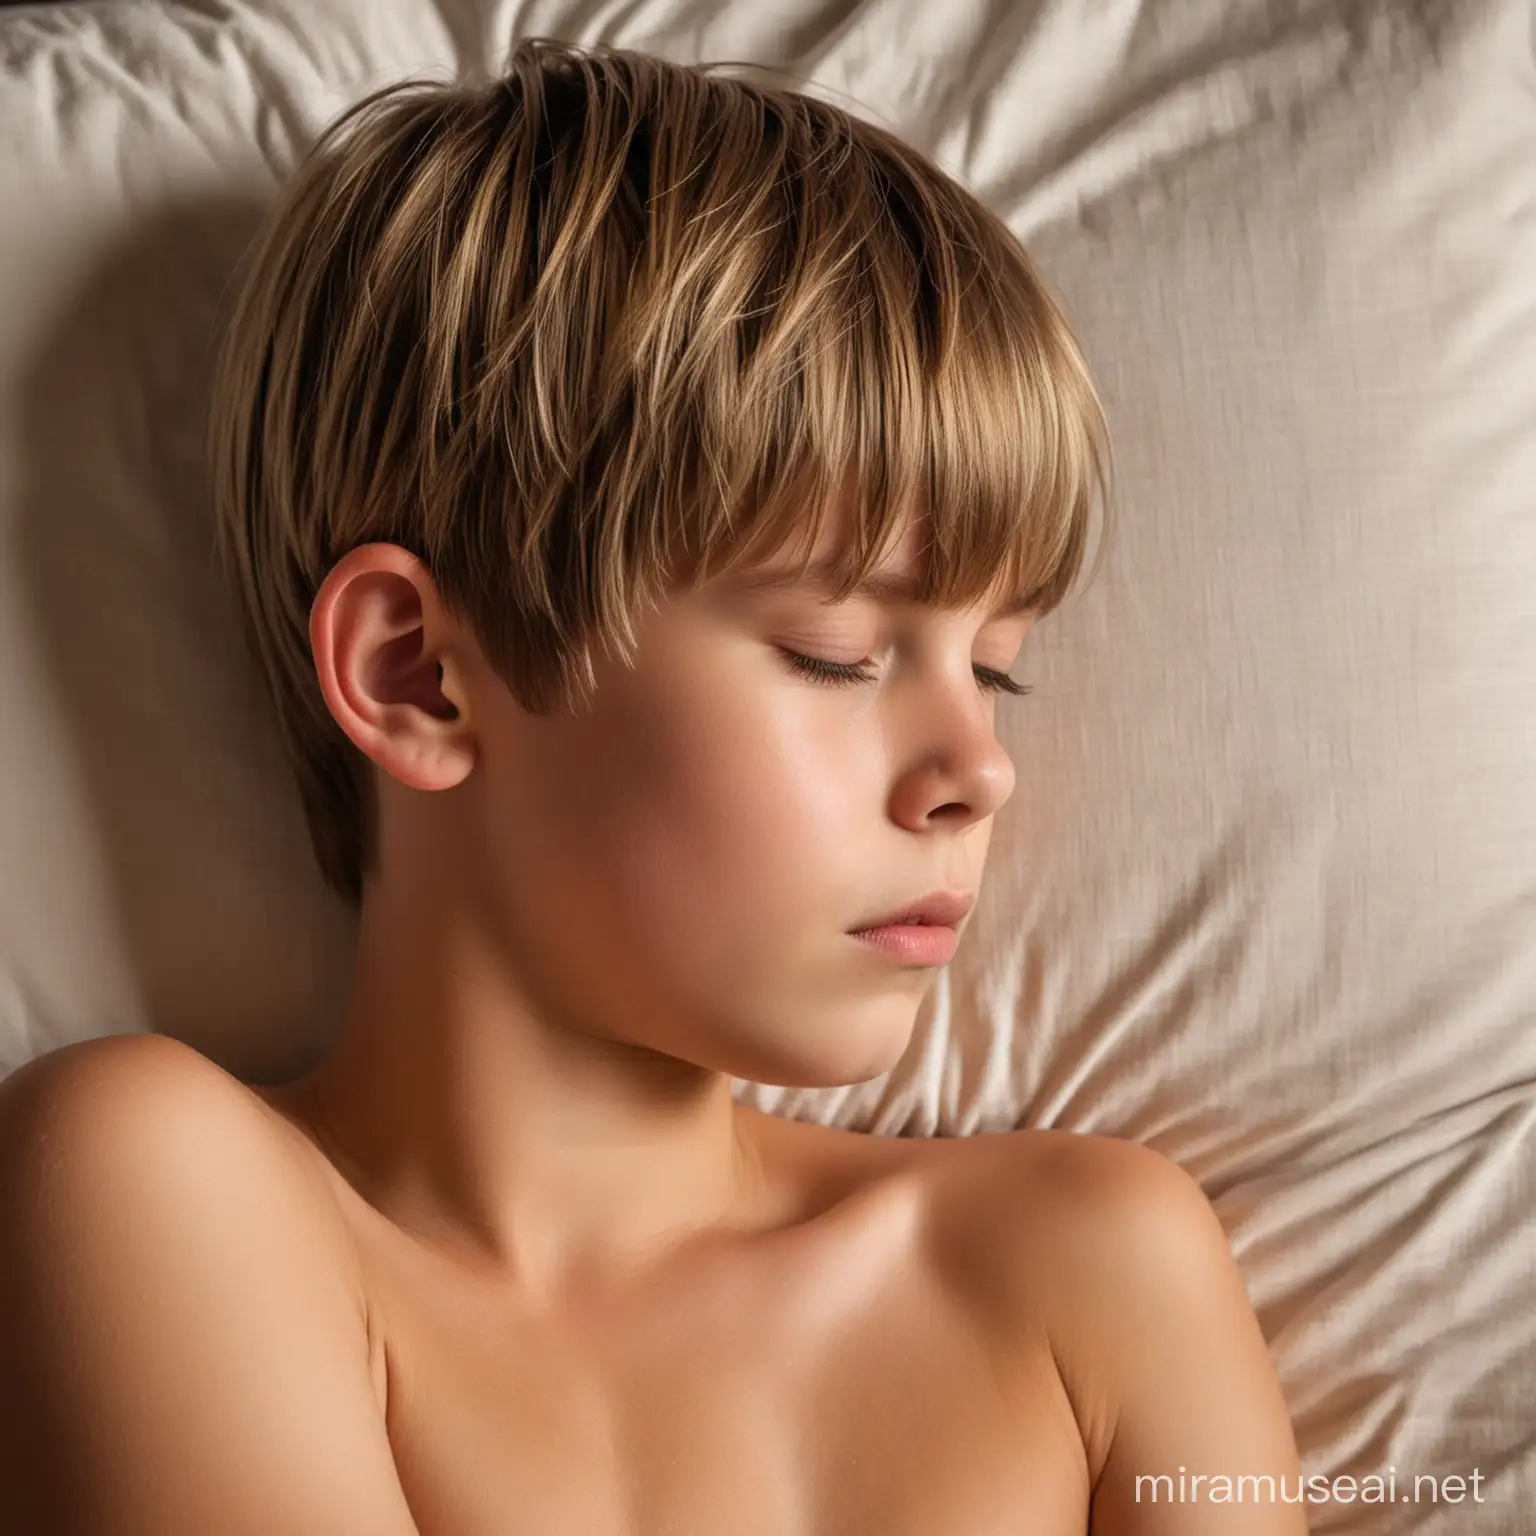 Sleeping 7YearOld Boy with Bowl Cut in Bright Light